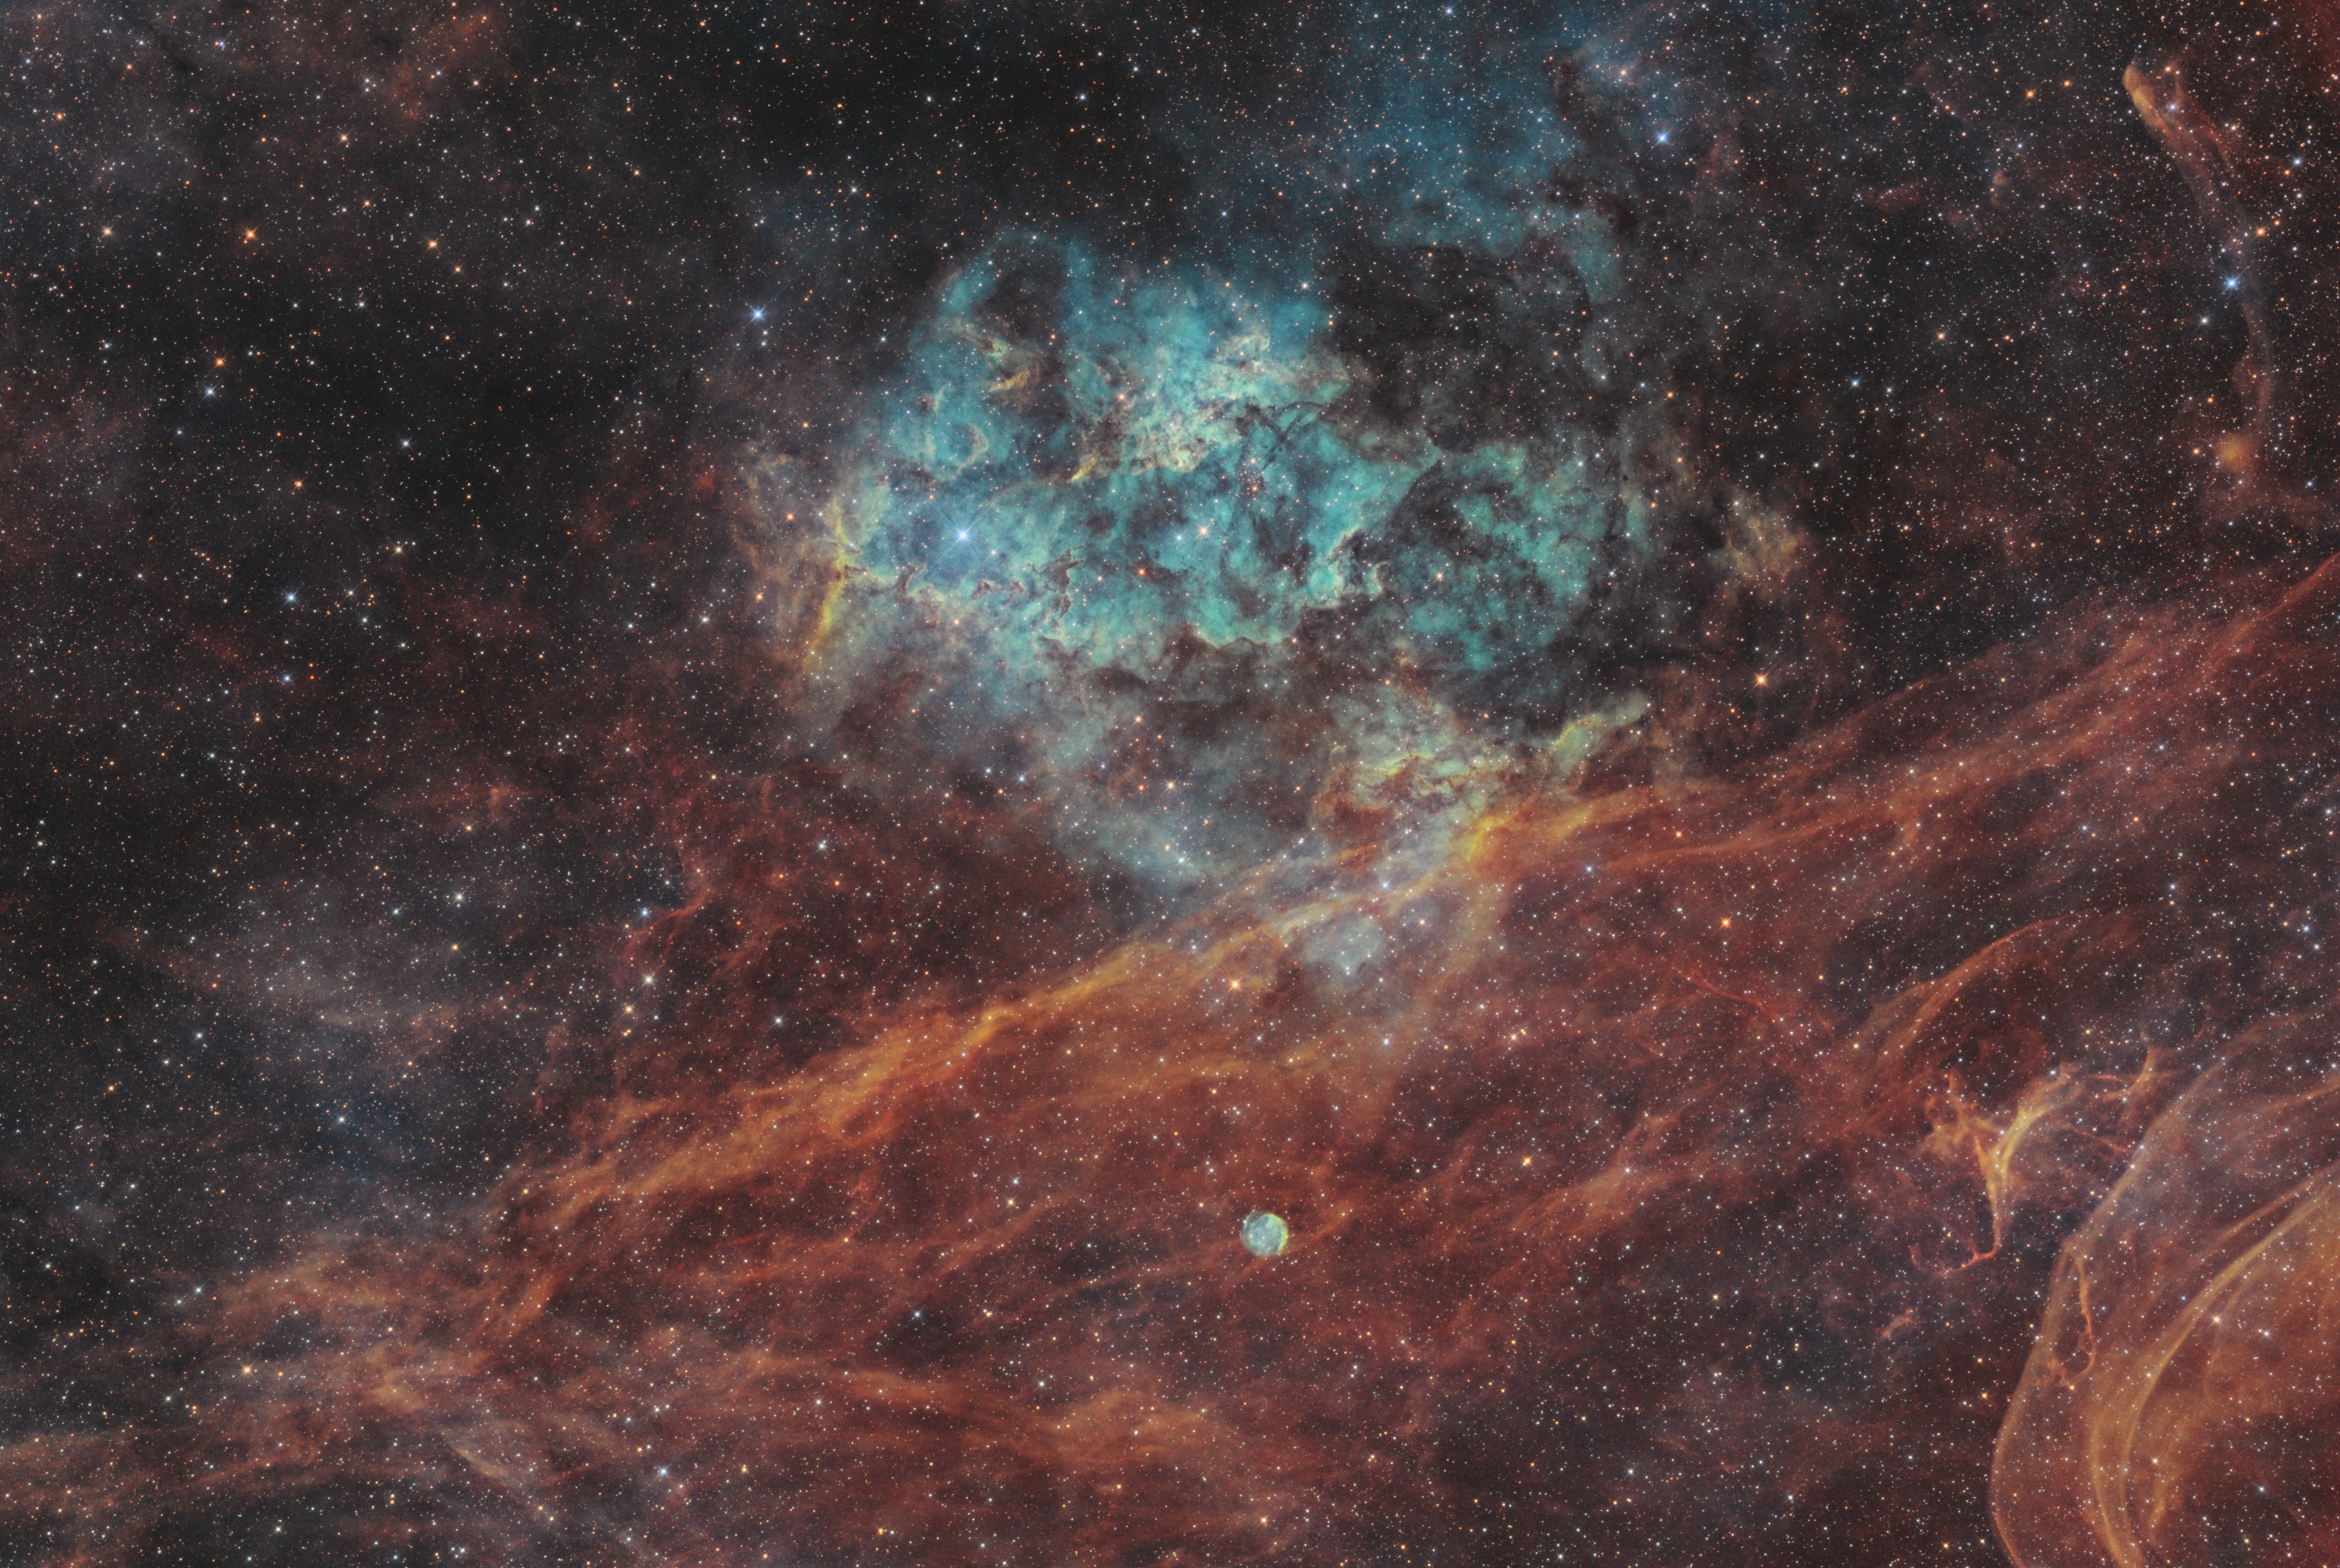 Sh2-115 Emission nebula in Cygnus